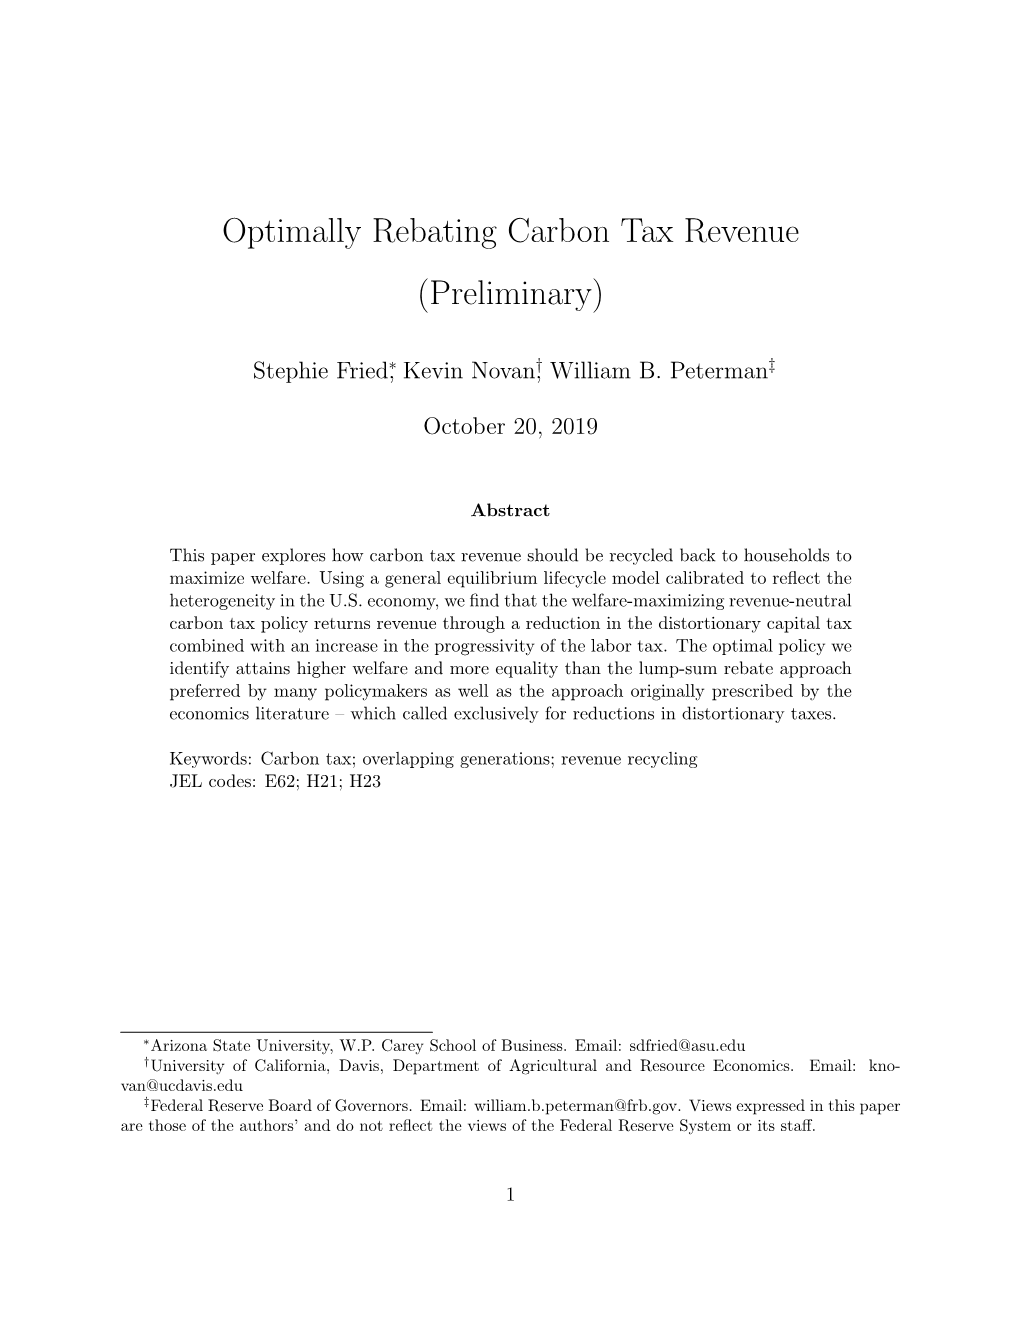 Optimally Rebating Carbon Tax Revenue (Preliminary)